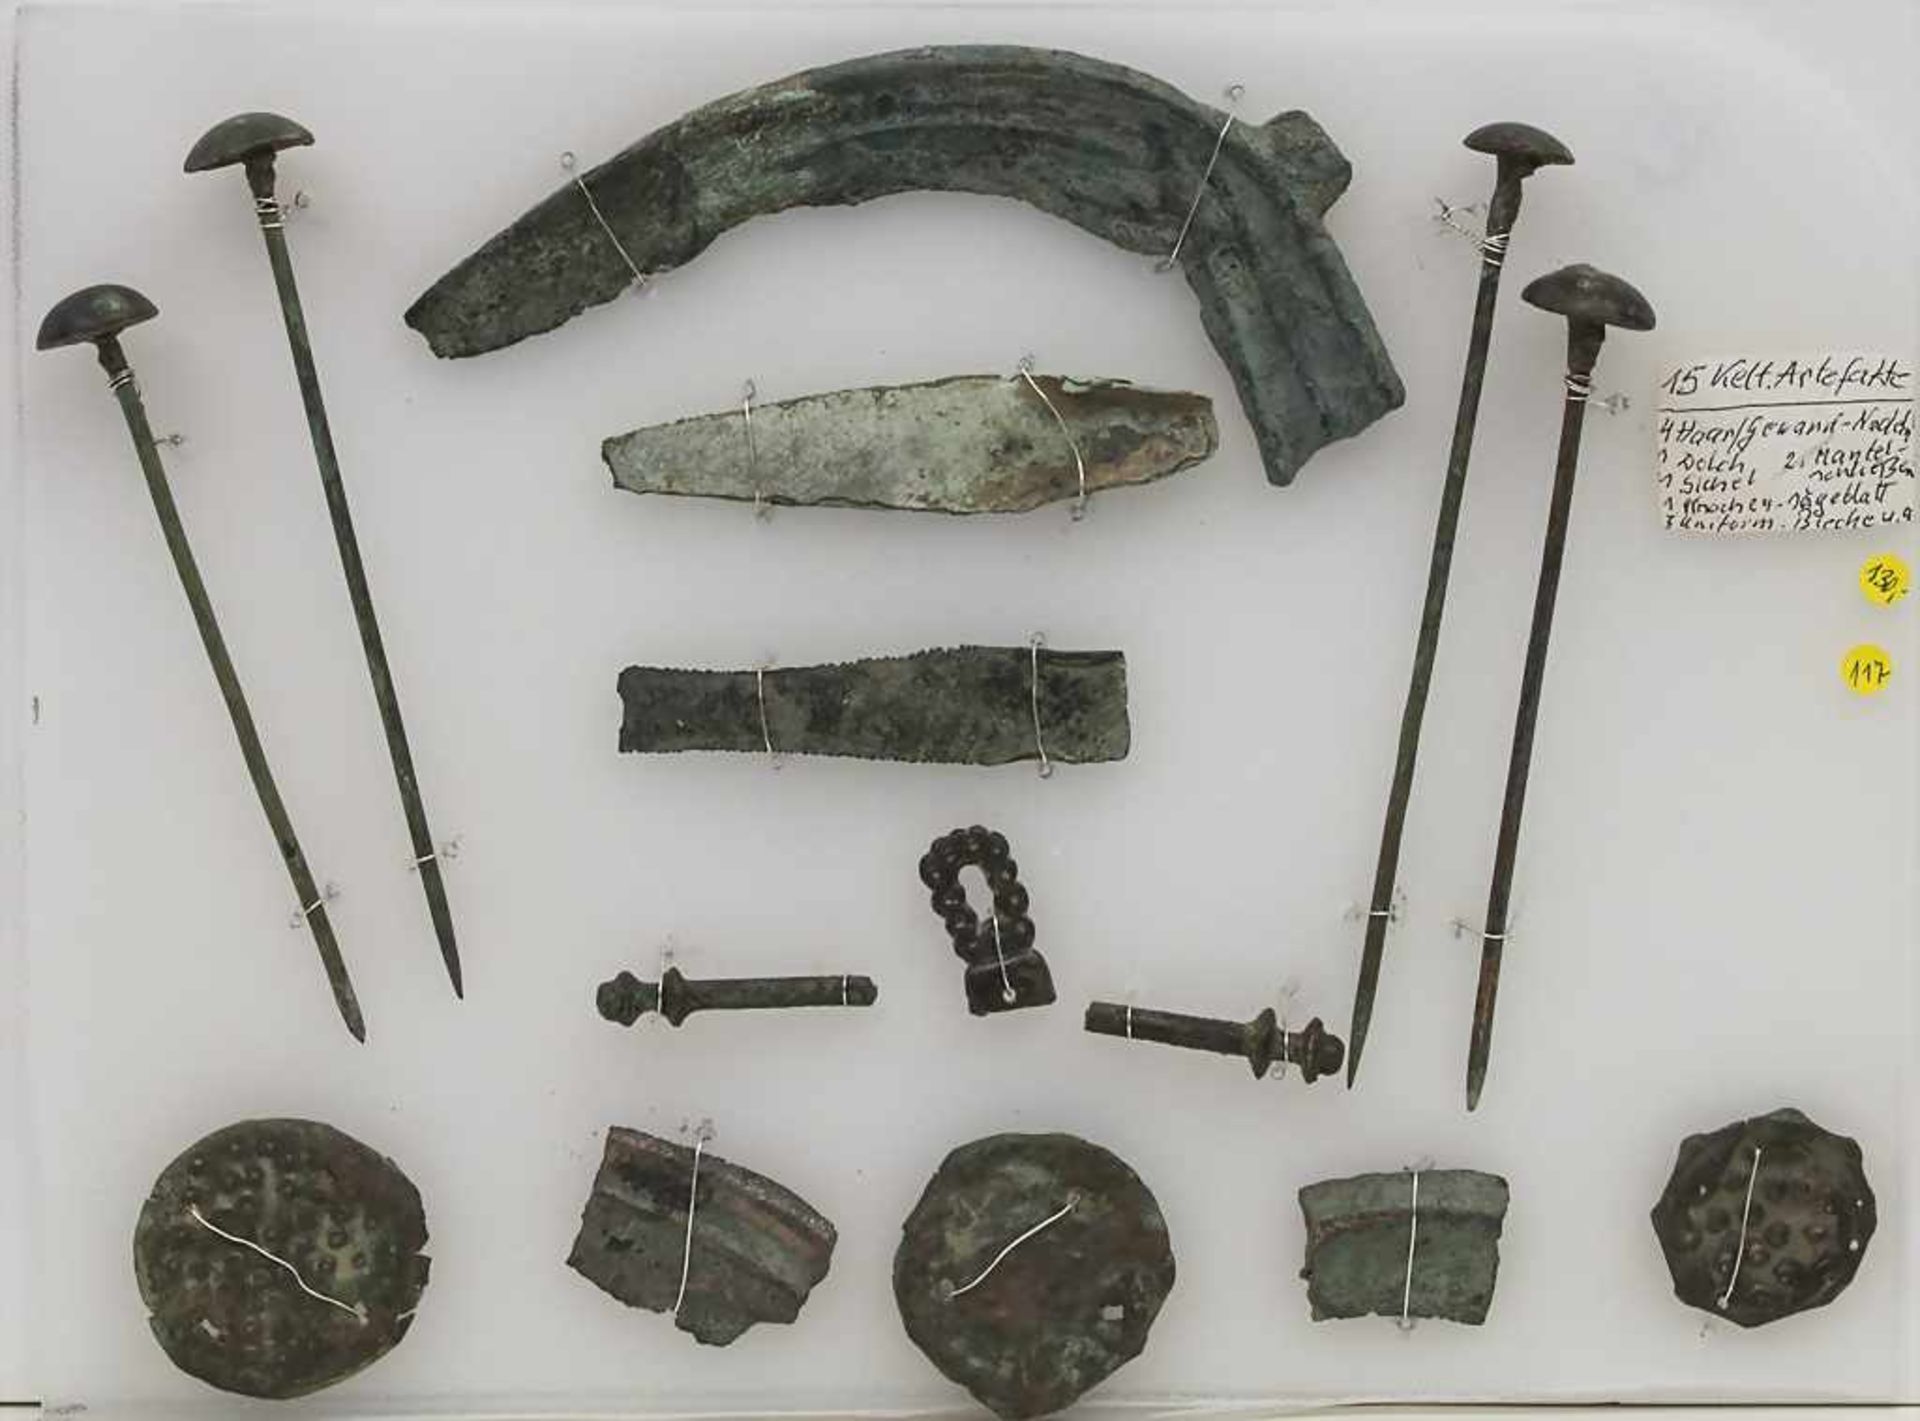 Lot 15 keltische Artefakte / 15 Celtic artefacts Haar- oder Gewandnadeln, Dolch, Sichel,